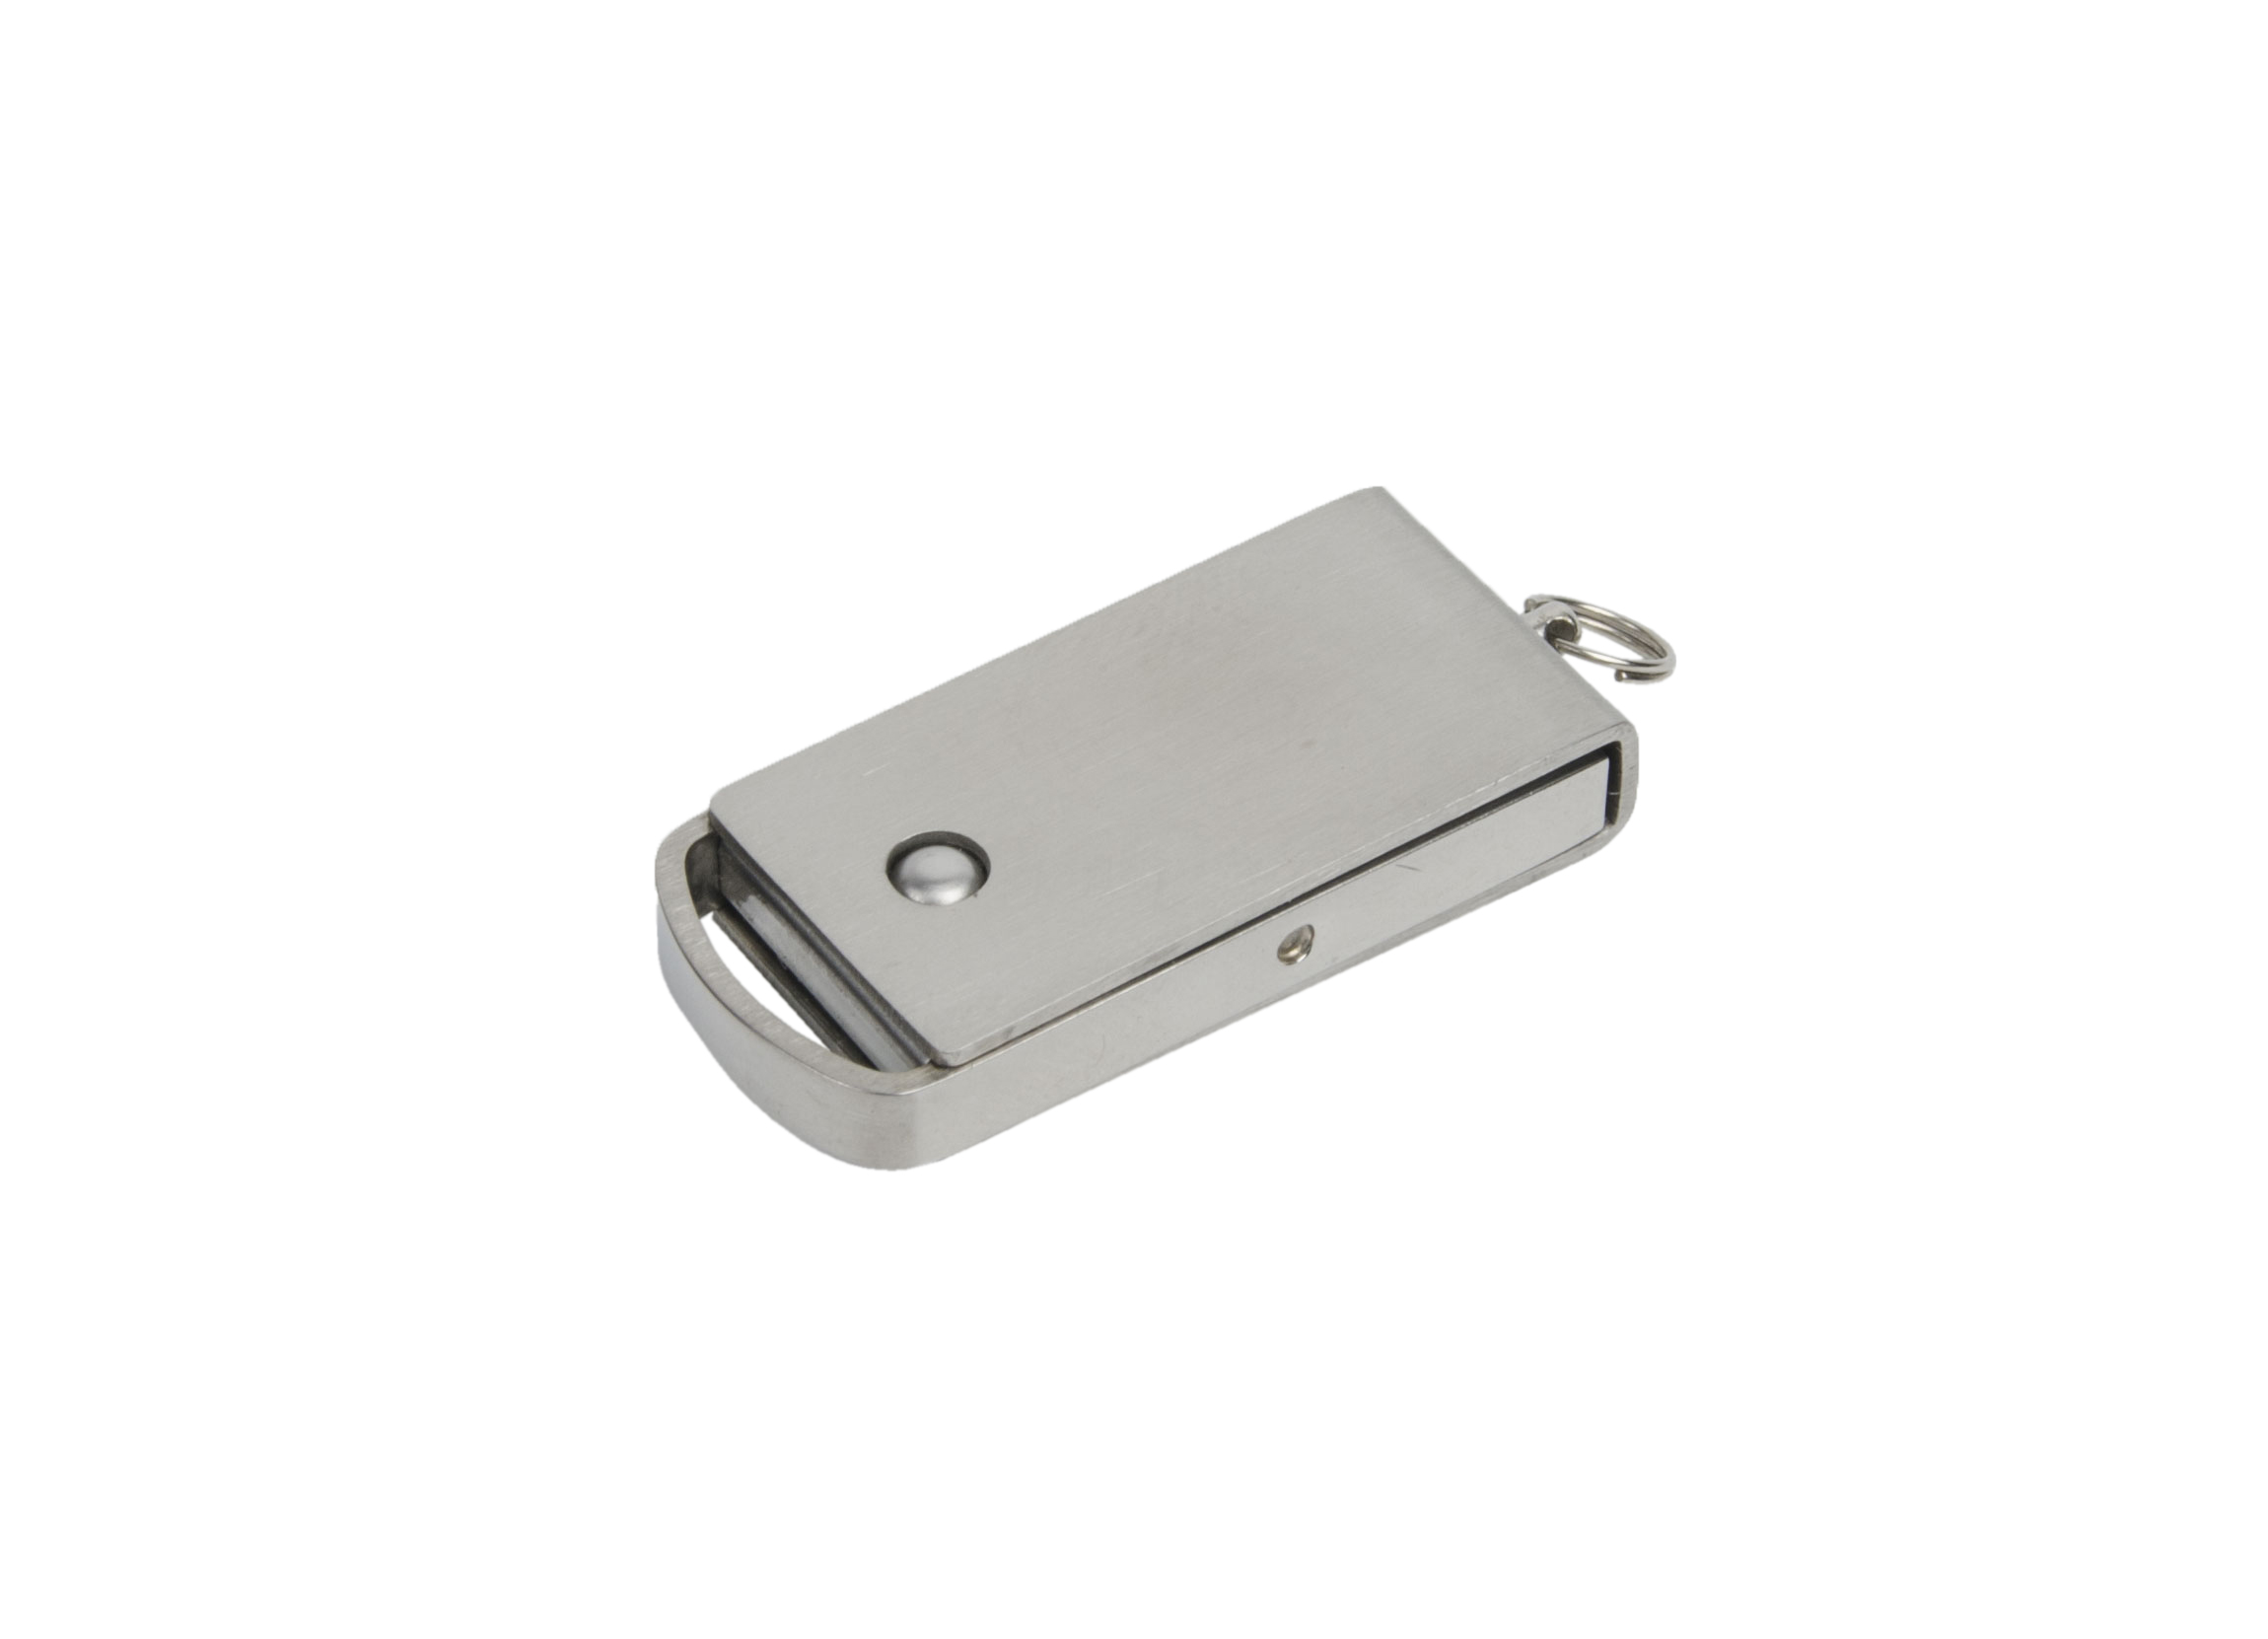 Mini USB flash drive HEBER silver